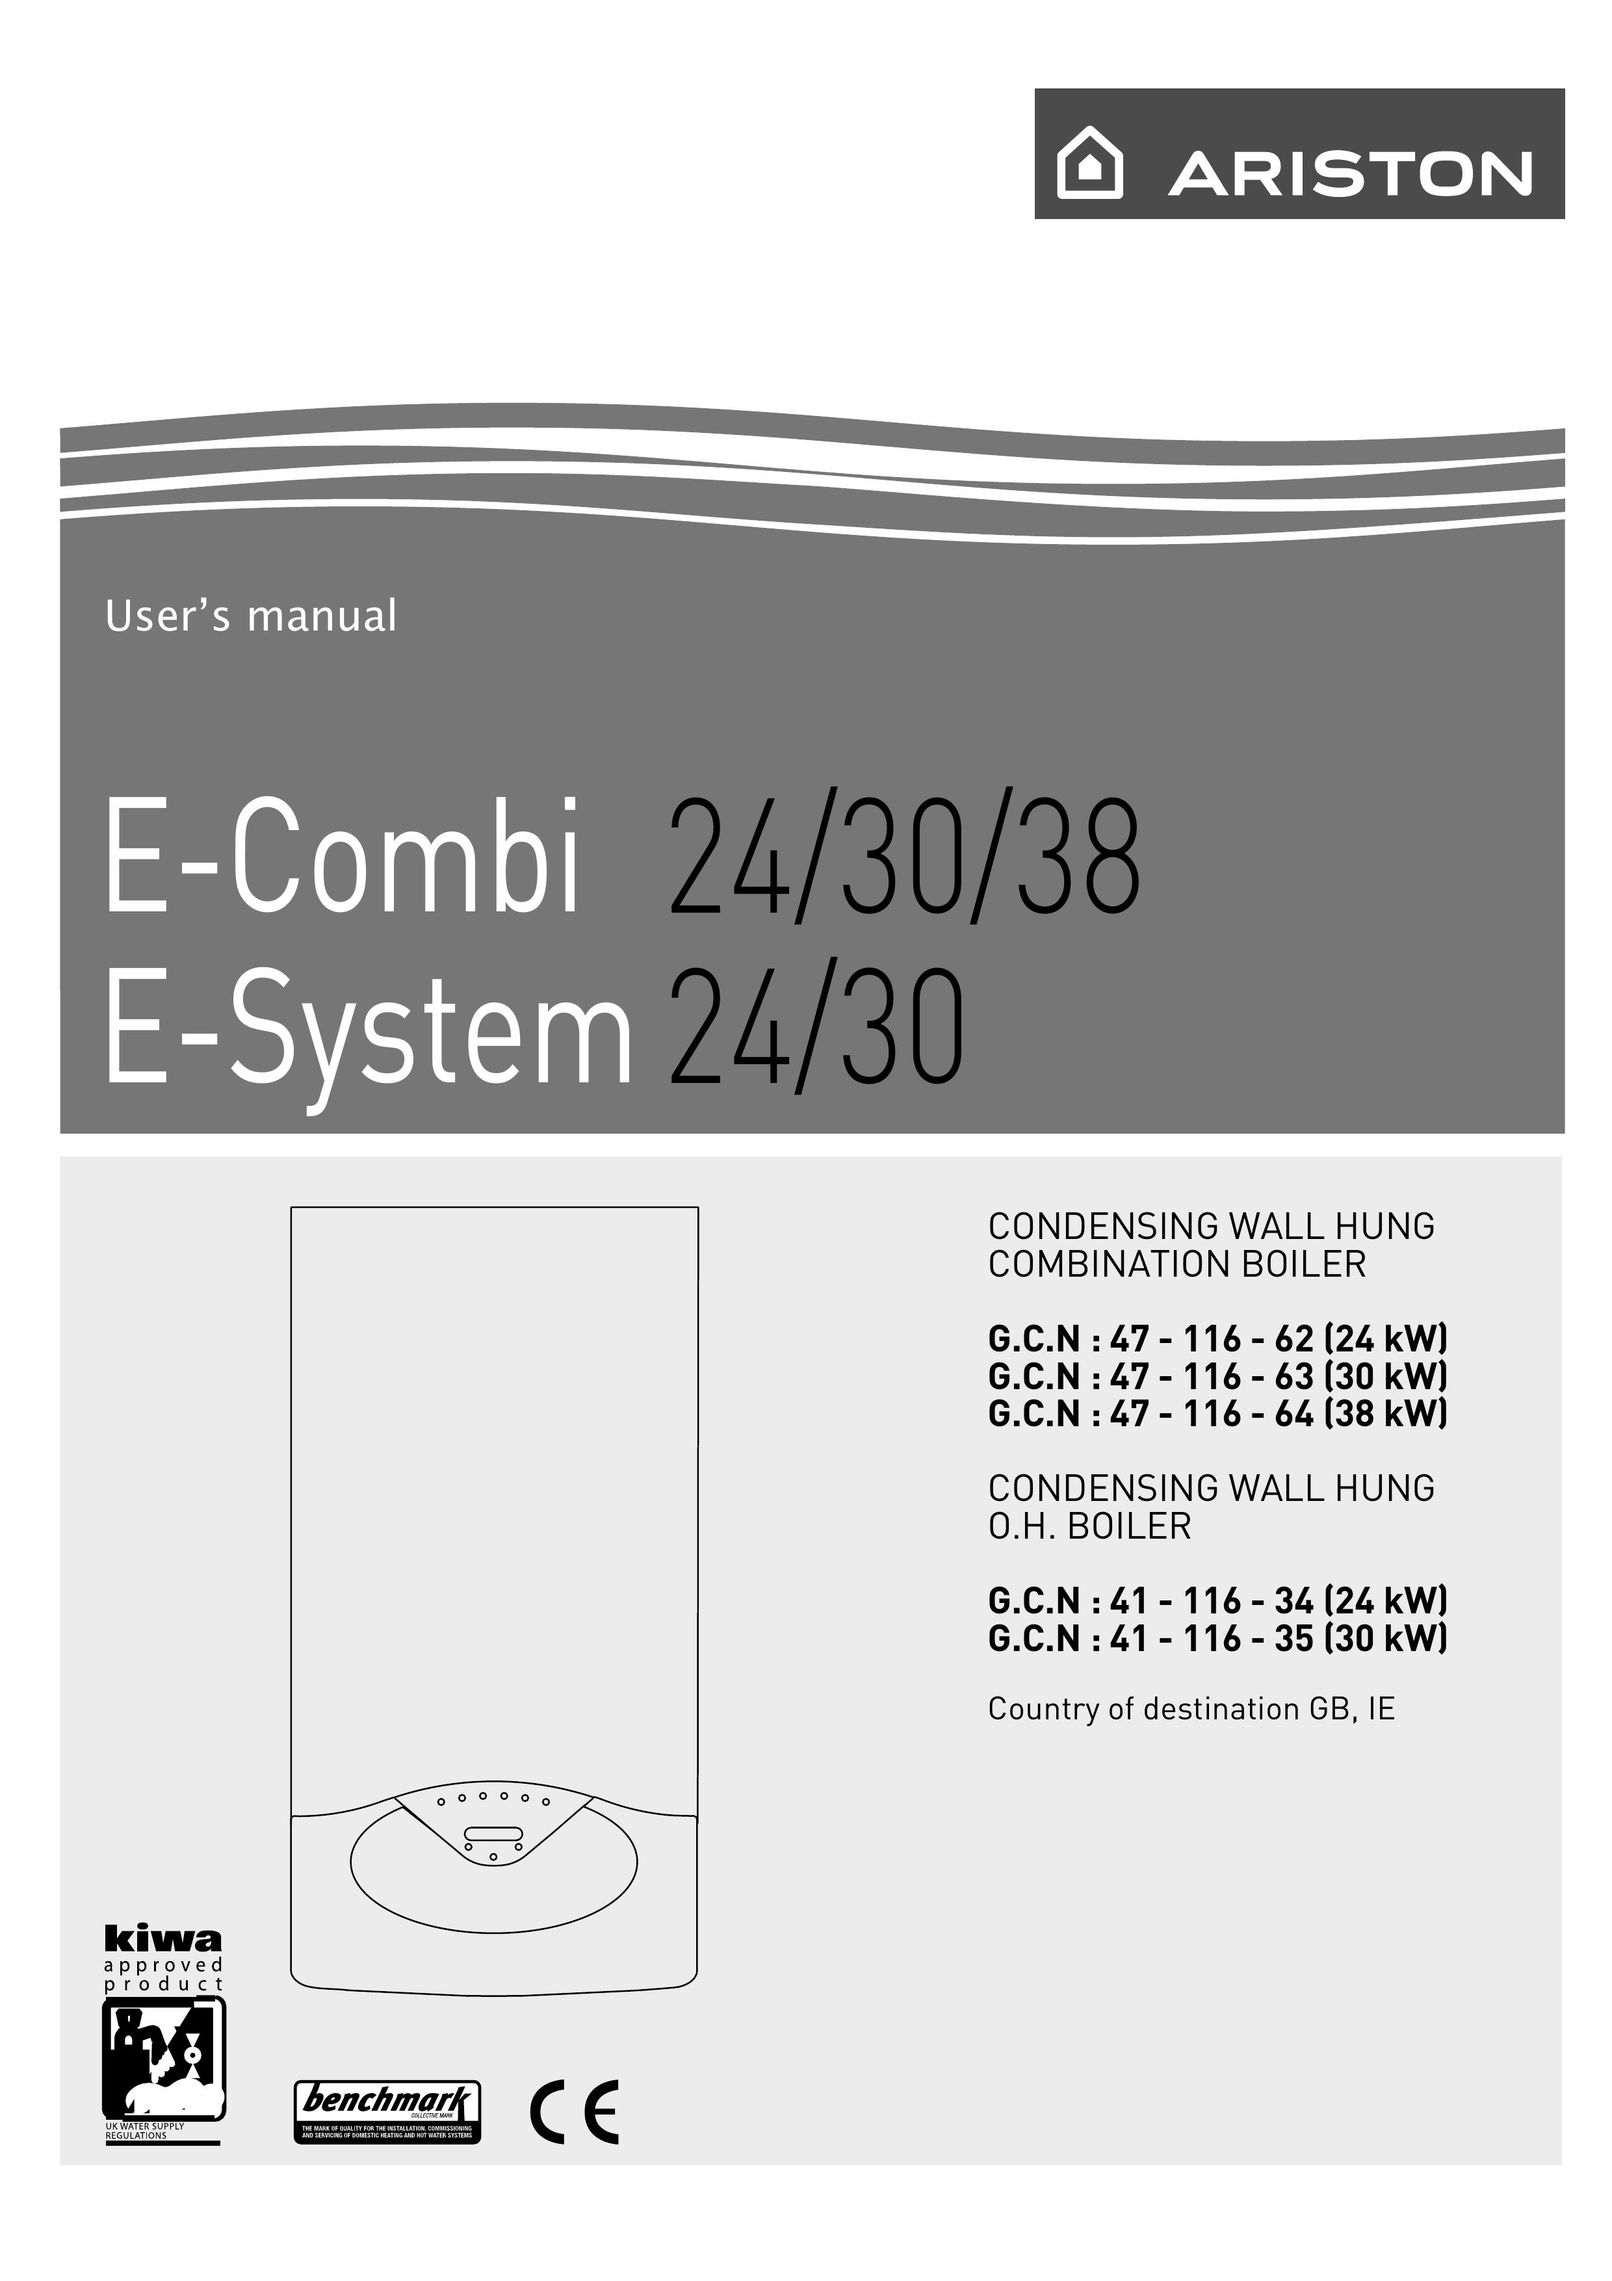 Ariston 47 - 116 - 63 Boiler User Manual